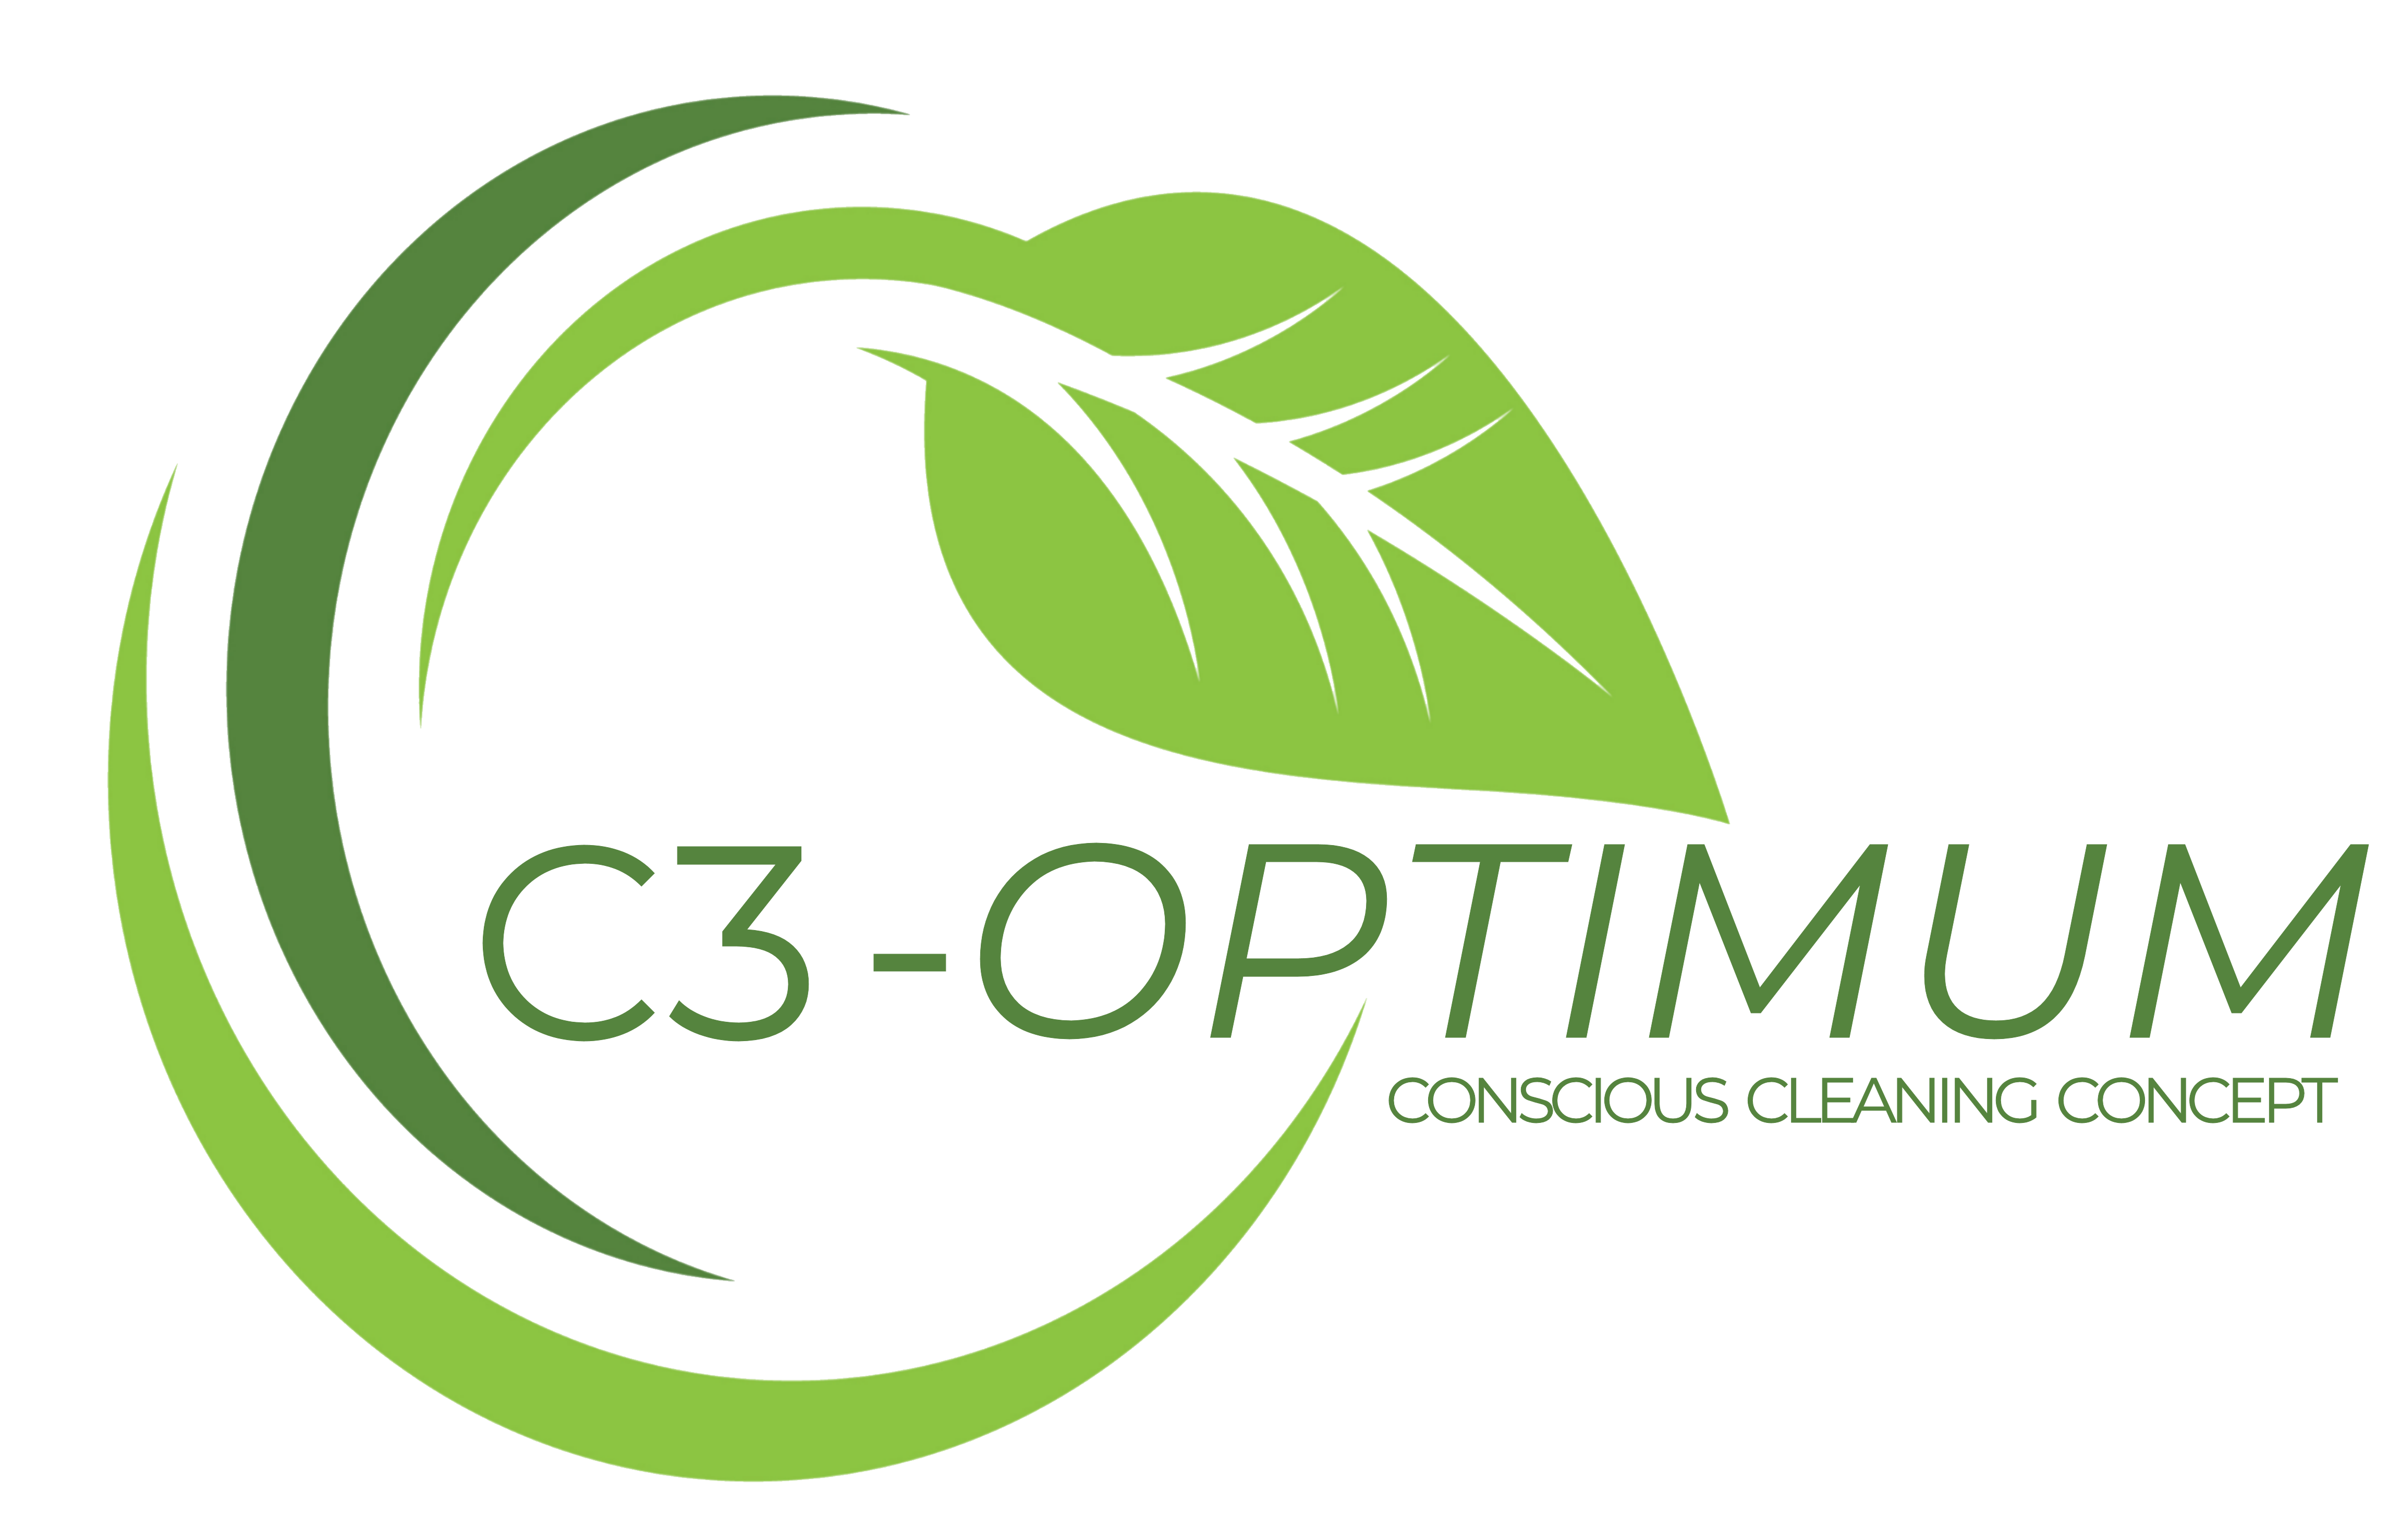 C3-OPTIMUM logo groen bladvorm met concious cleaning concept text